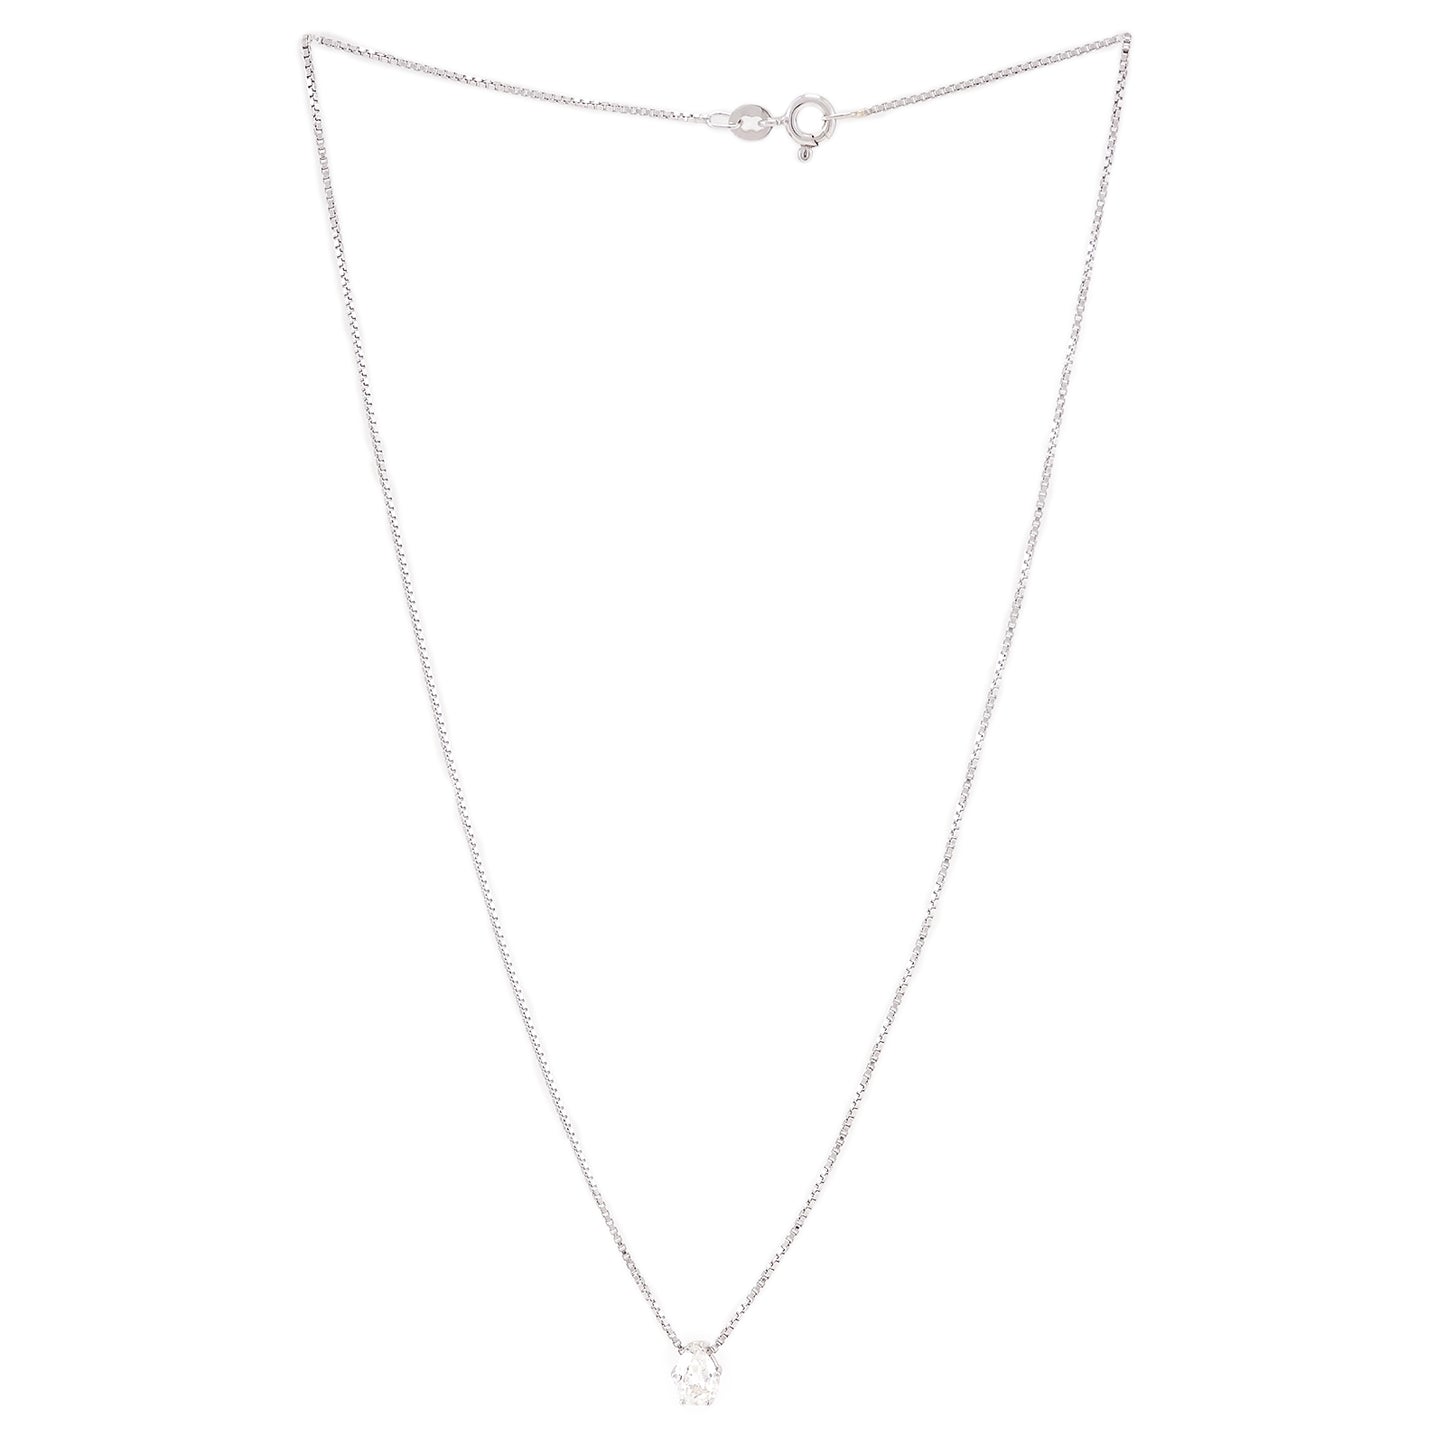 Pendant drop diamond 0.60ct white gold 585 Venetian chain 38cm women's jewelry